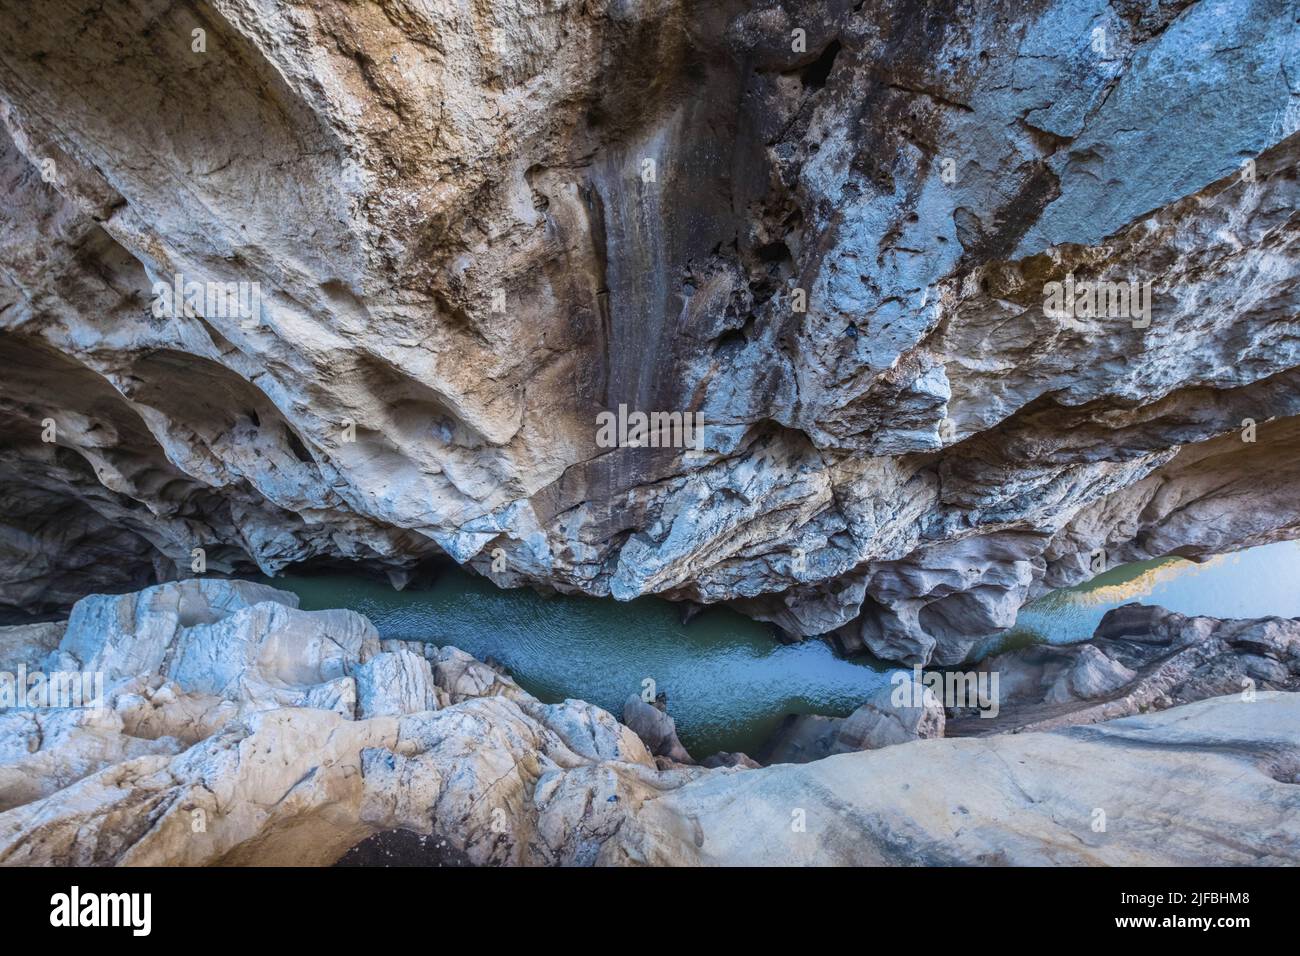 Spain, Andalousia, Malaga, El Chorro, Gaitanejo canyon, vertigo trail of Caminito del Rey Stock Photo